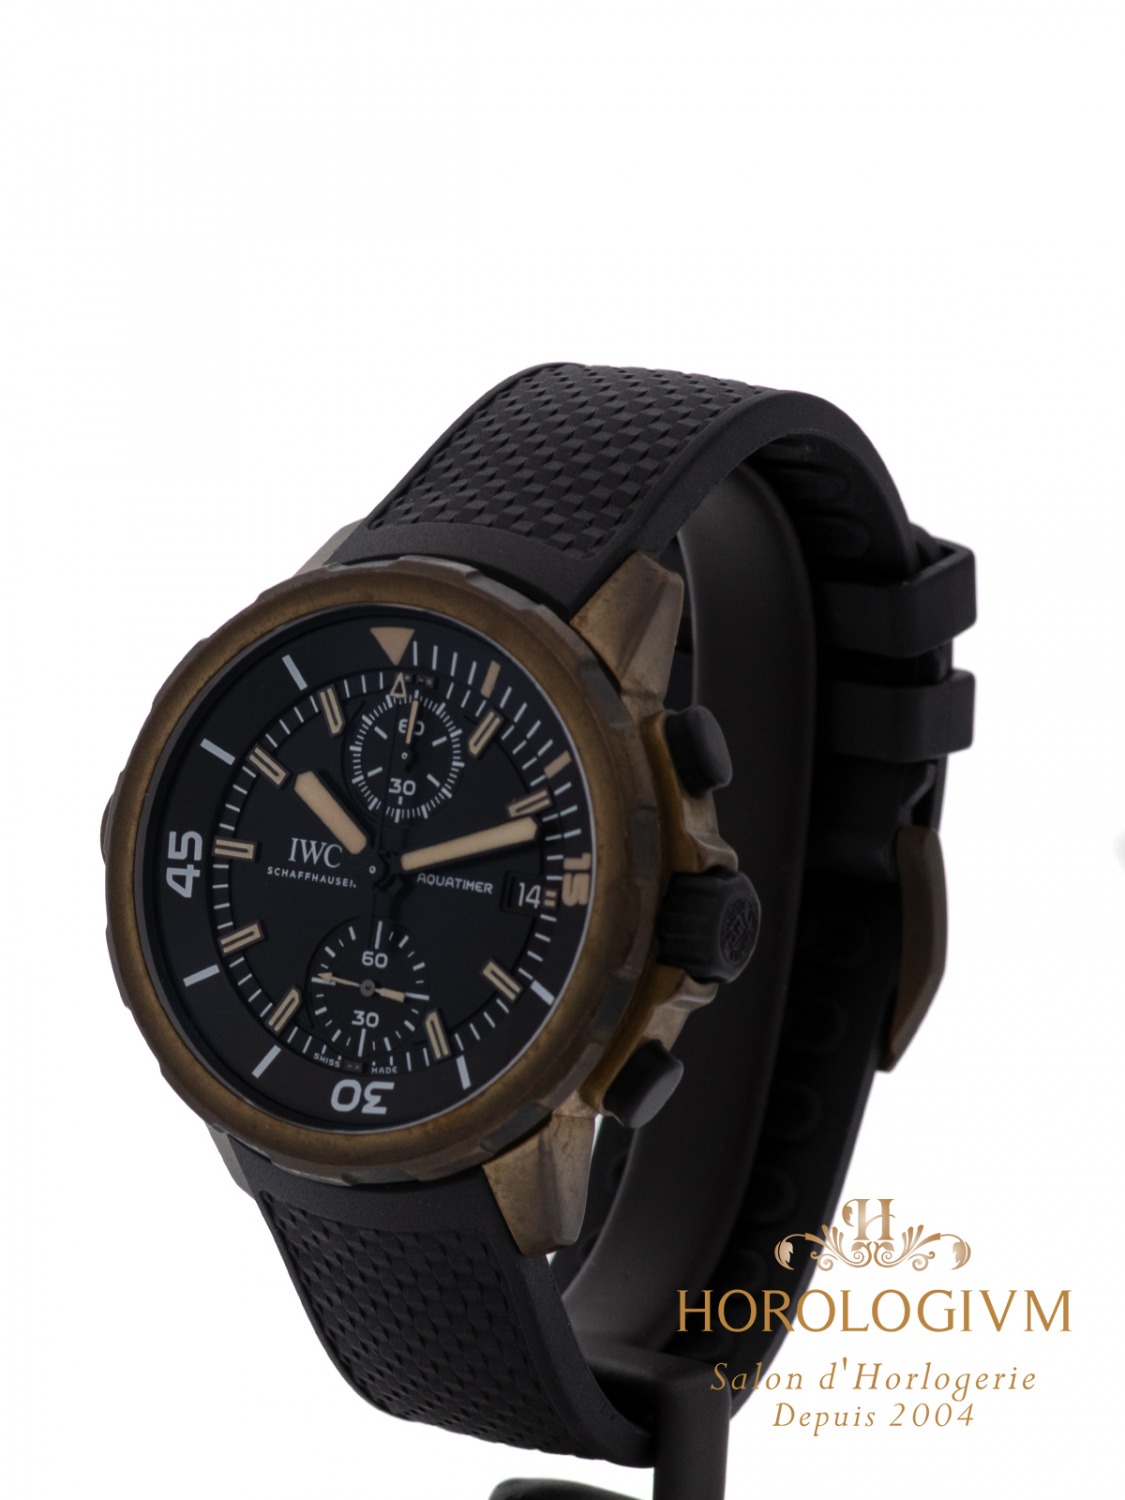 IWC AQUATIMER EXPEDITION CHARLES DARWIN BRONZE CHRONOGRAPH FLYBACK 44MM Ref. IW379503 watch, bronze